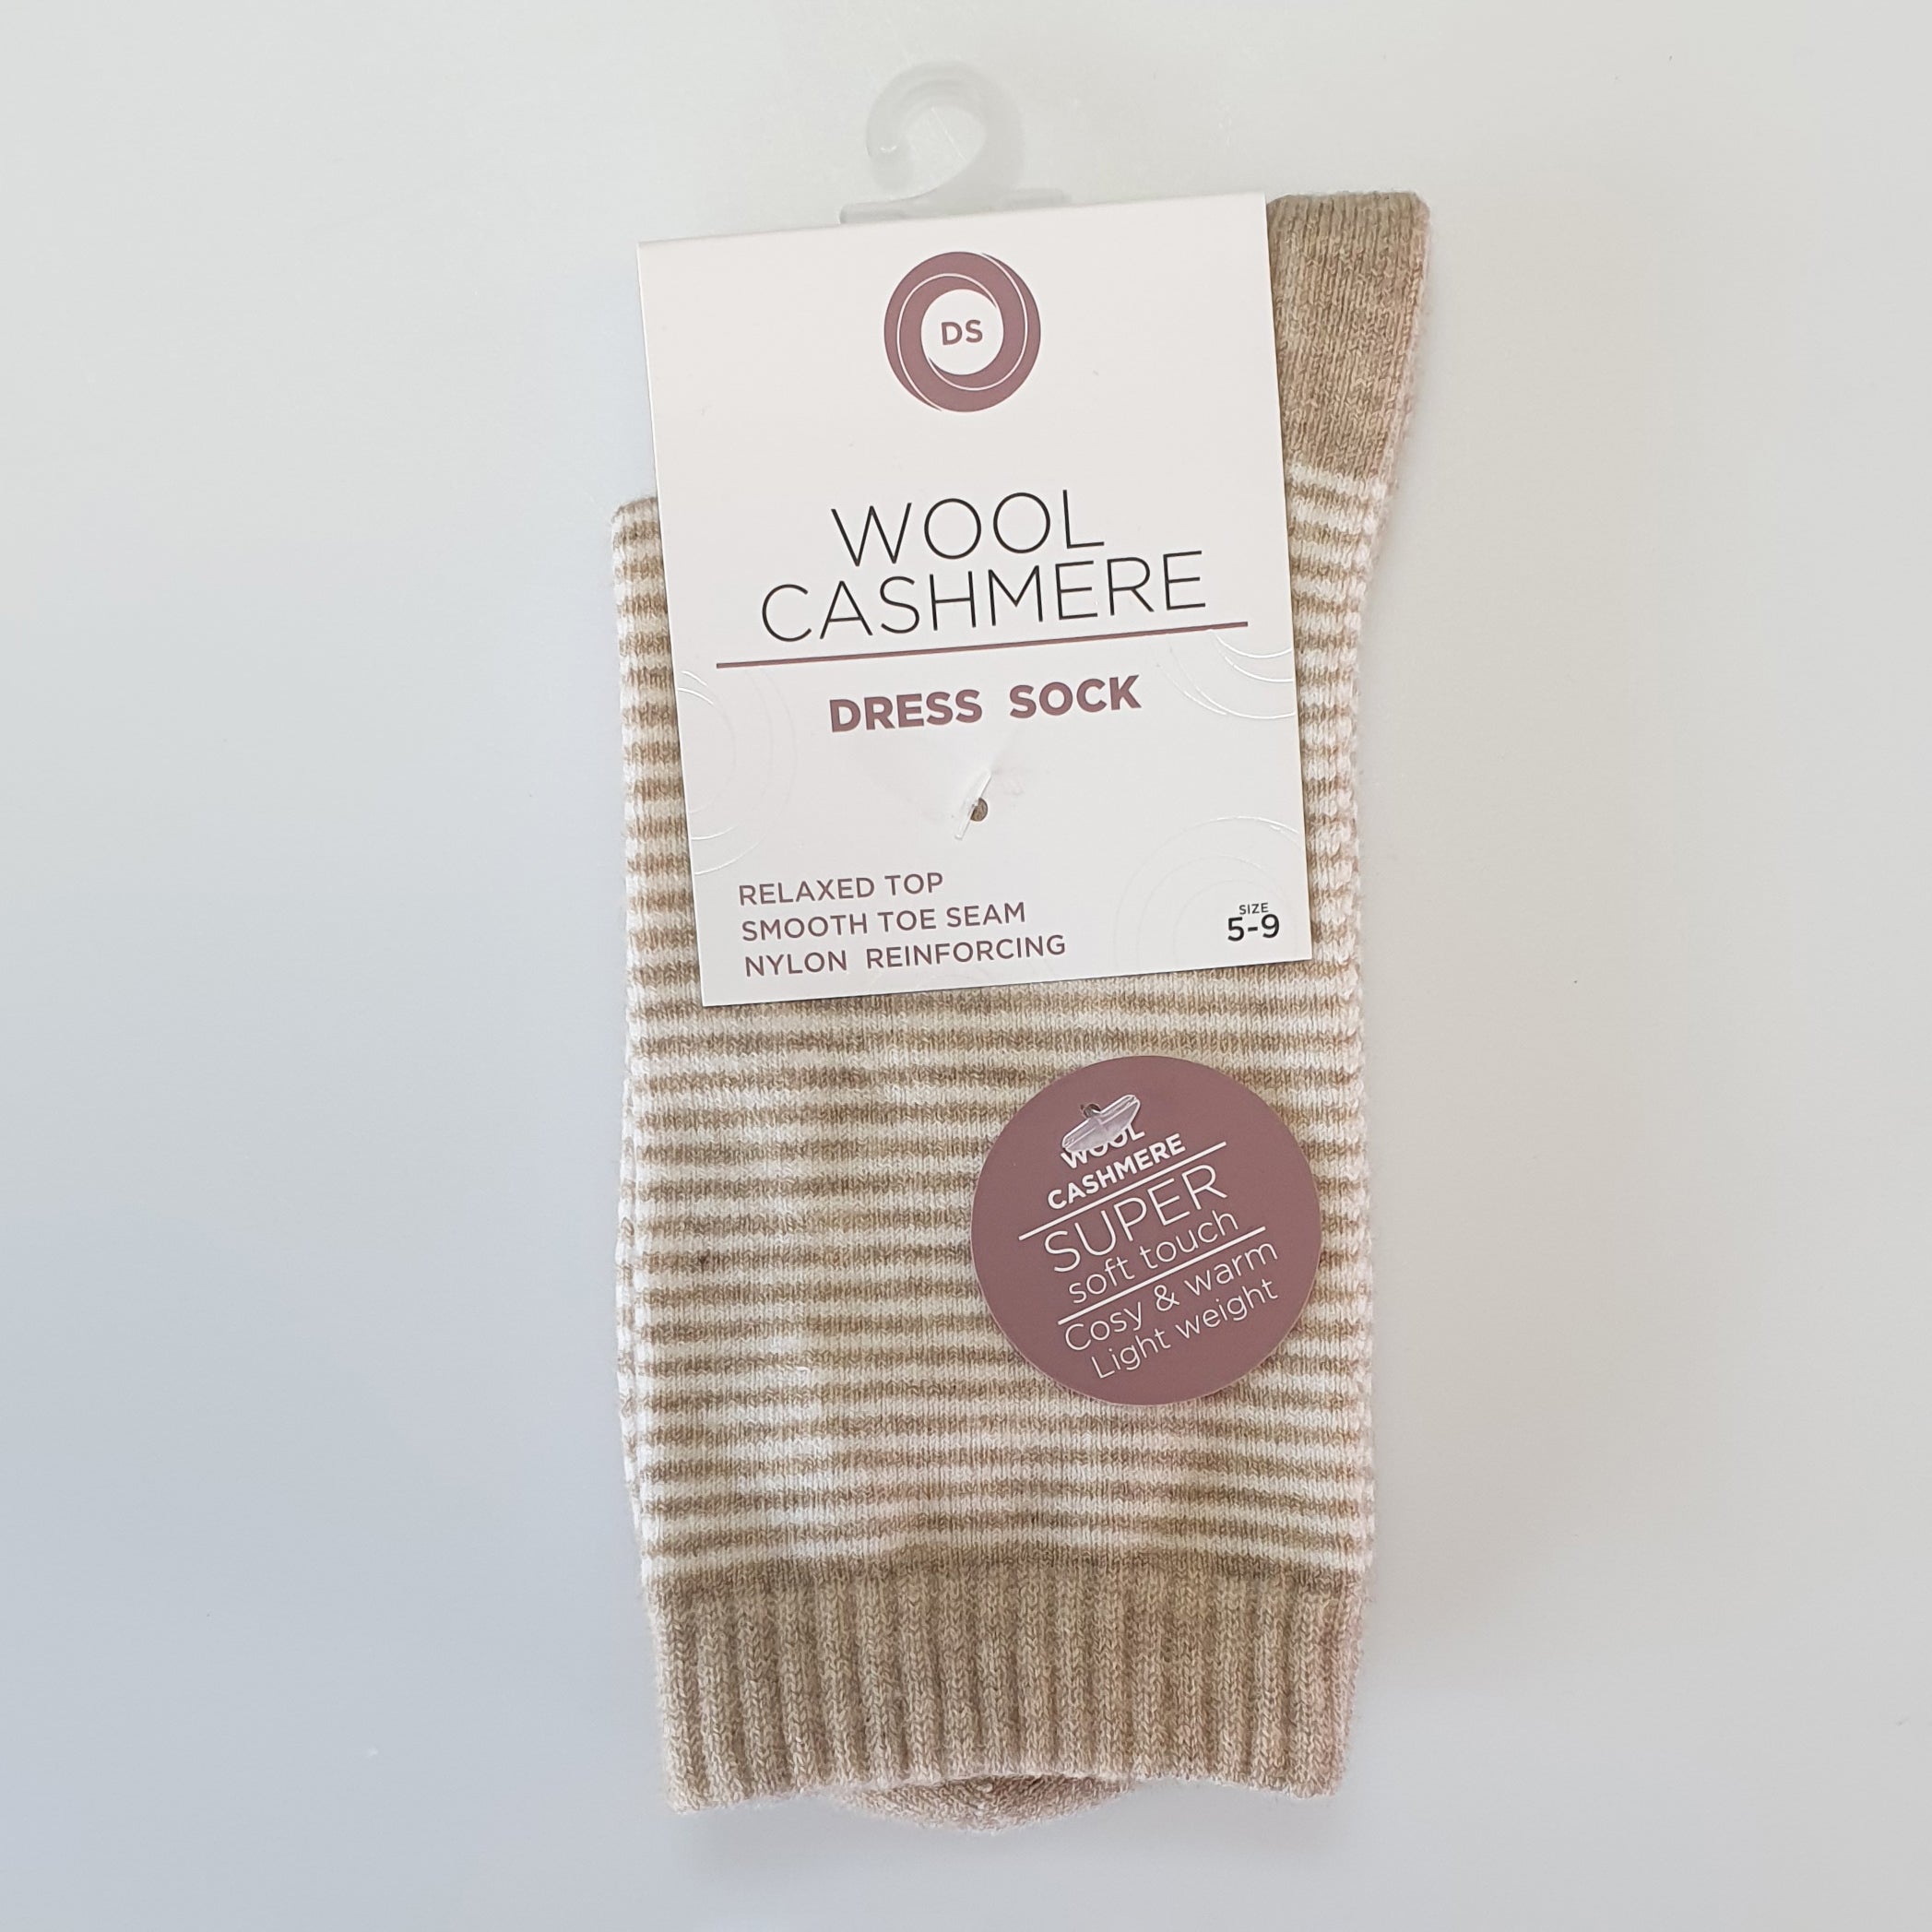 DS Wool Cashmere Dress Socks - Striped Beige